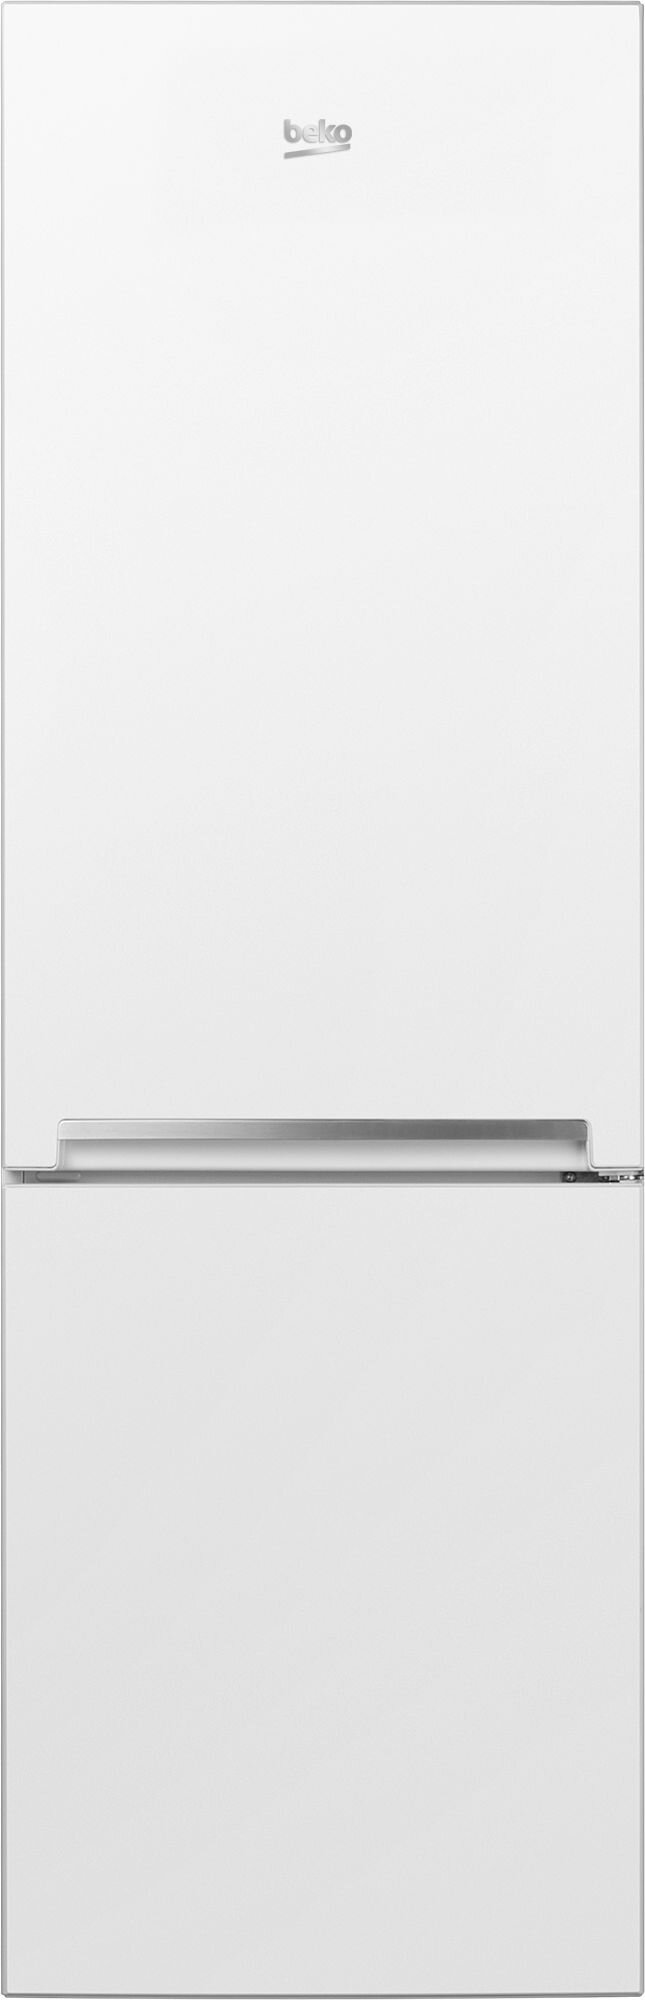 Двухкамерный холодильник Beko CNKDN6270K20W, No frost, белый